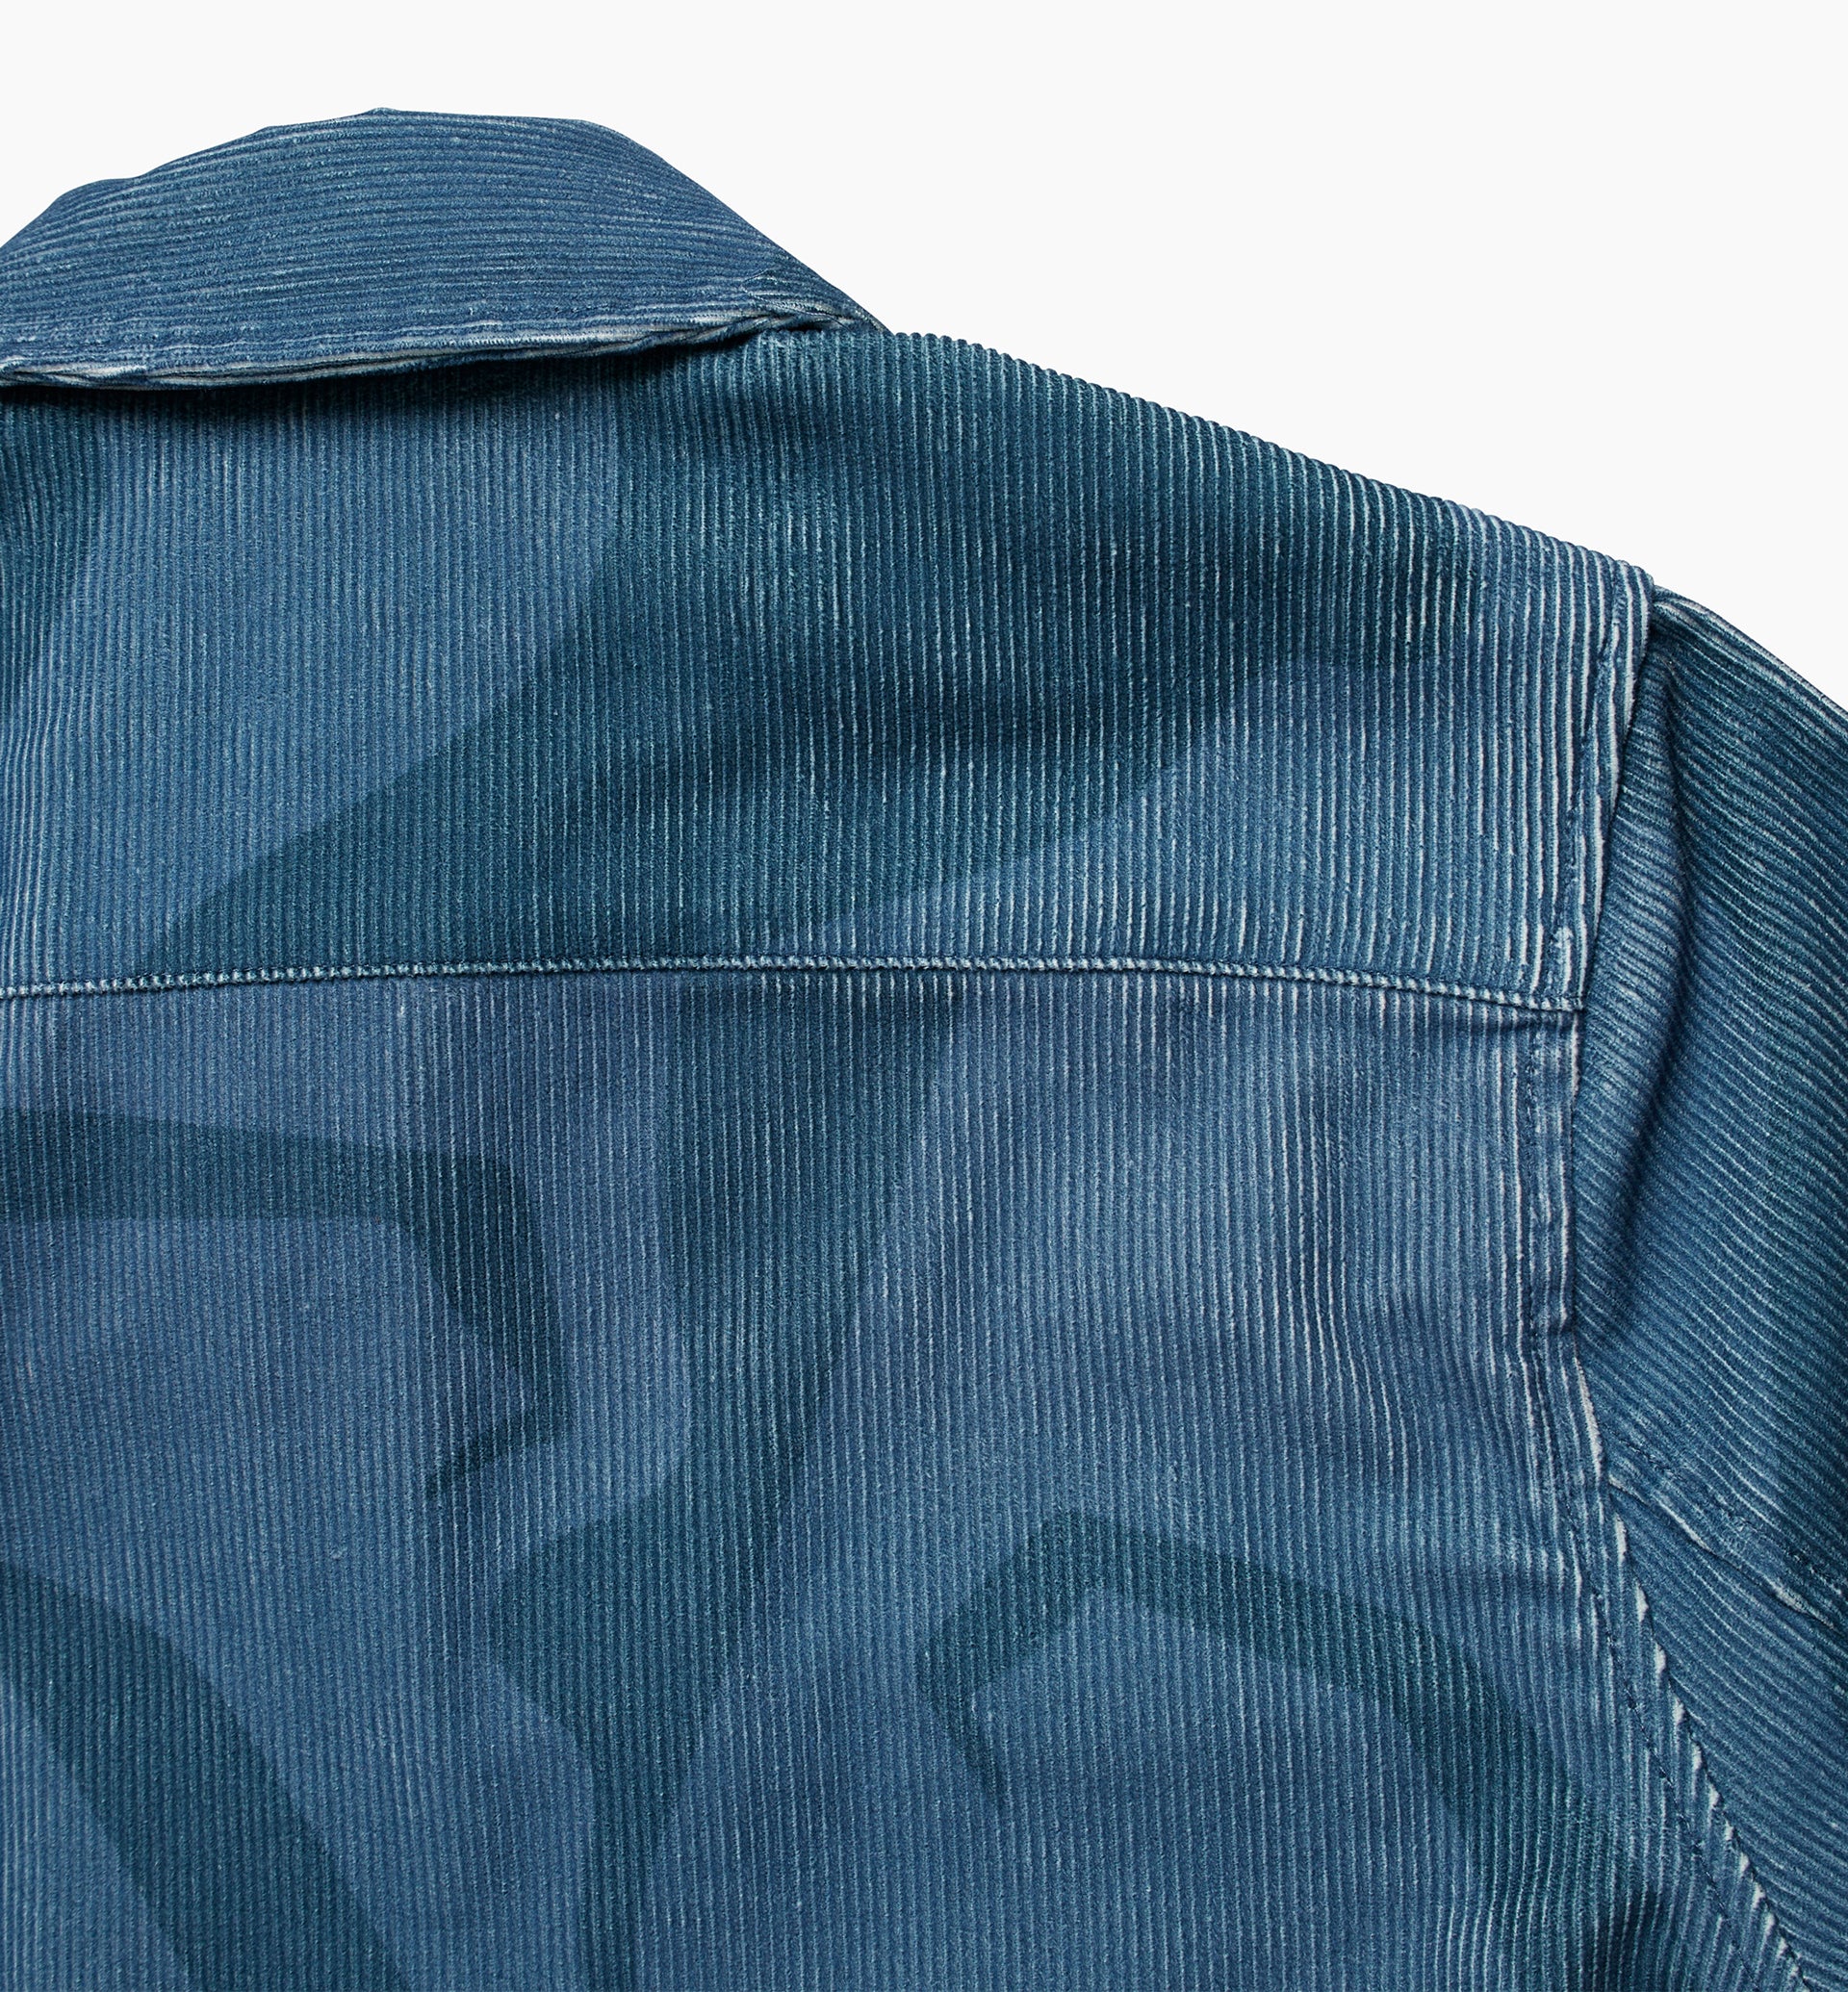 Concepts Dubai | Parra army dreamers woven shirt jacket (blue grey)